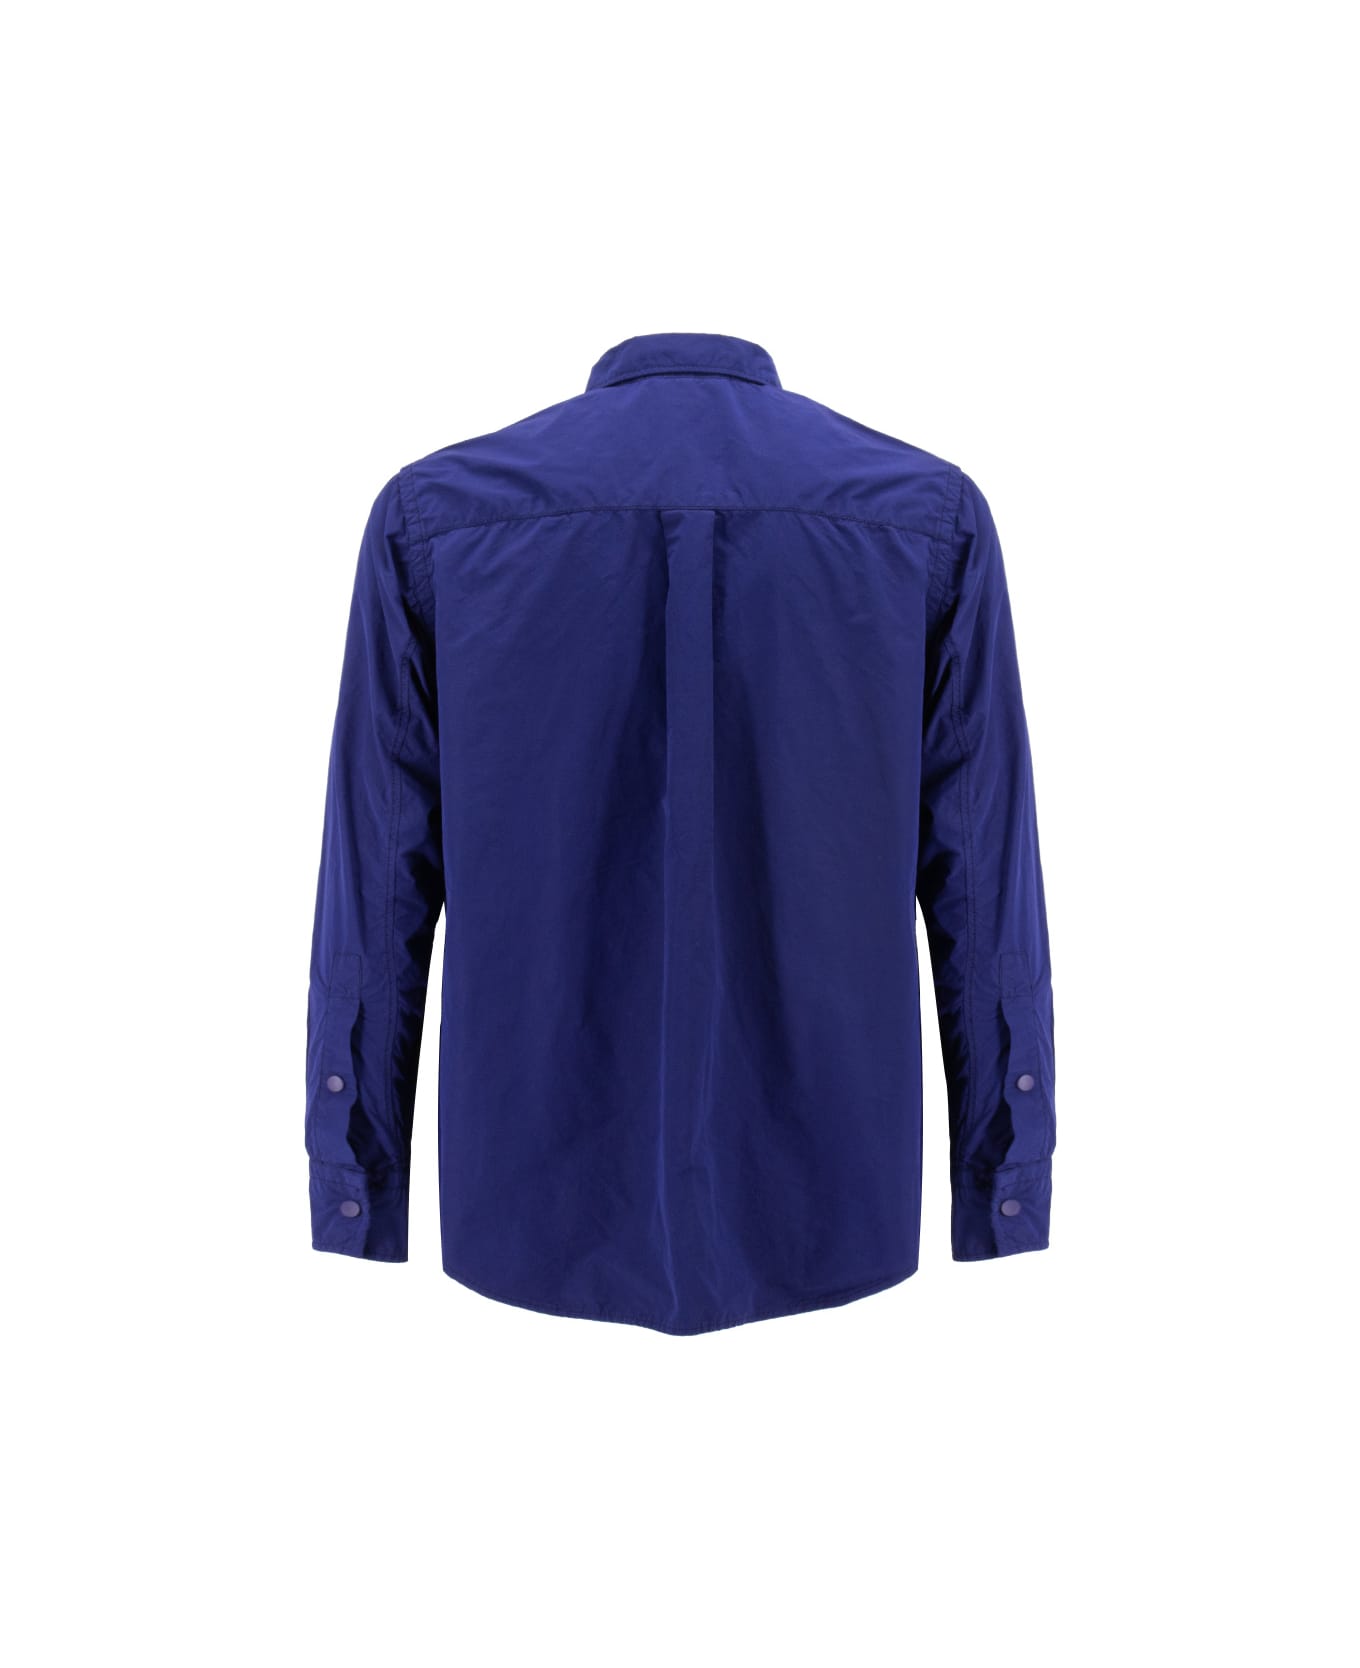 Aspesi Jacket - BLUE 